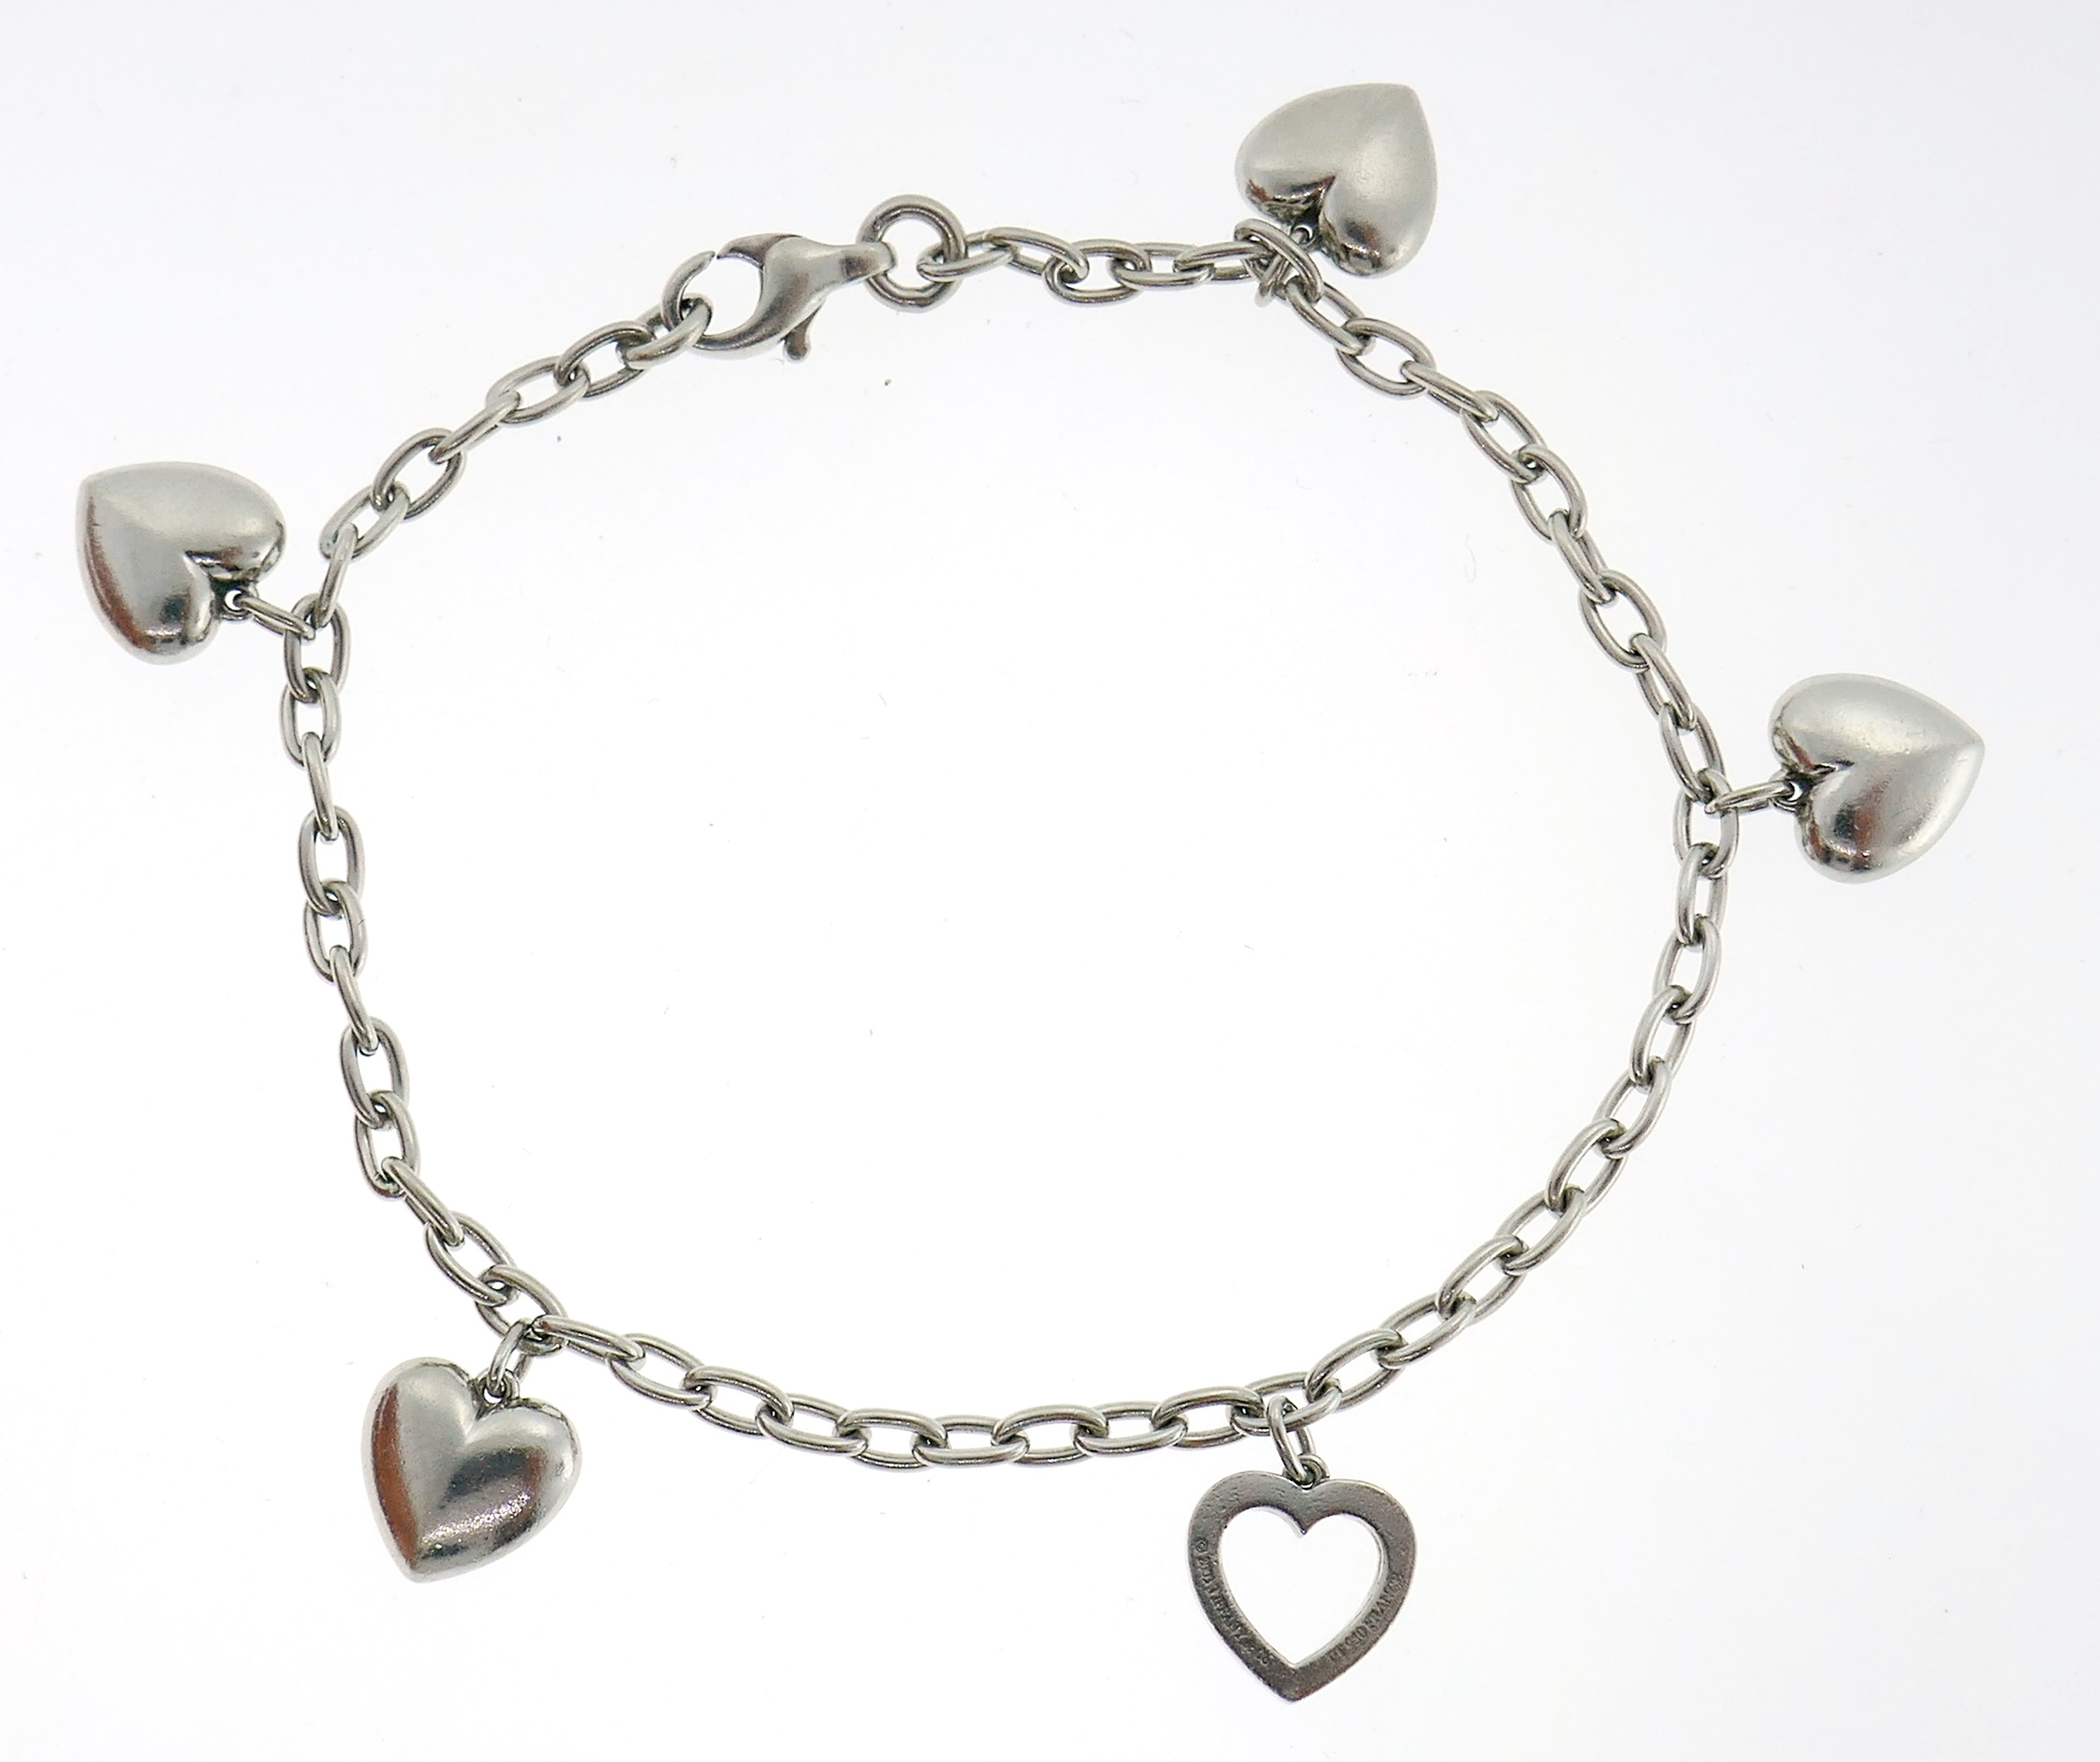 Tiffany & Co. Diamond Platinum Charm Bracelet with Heart Charms